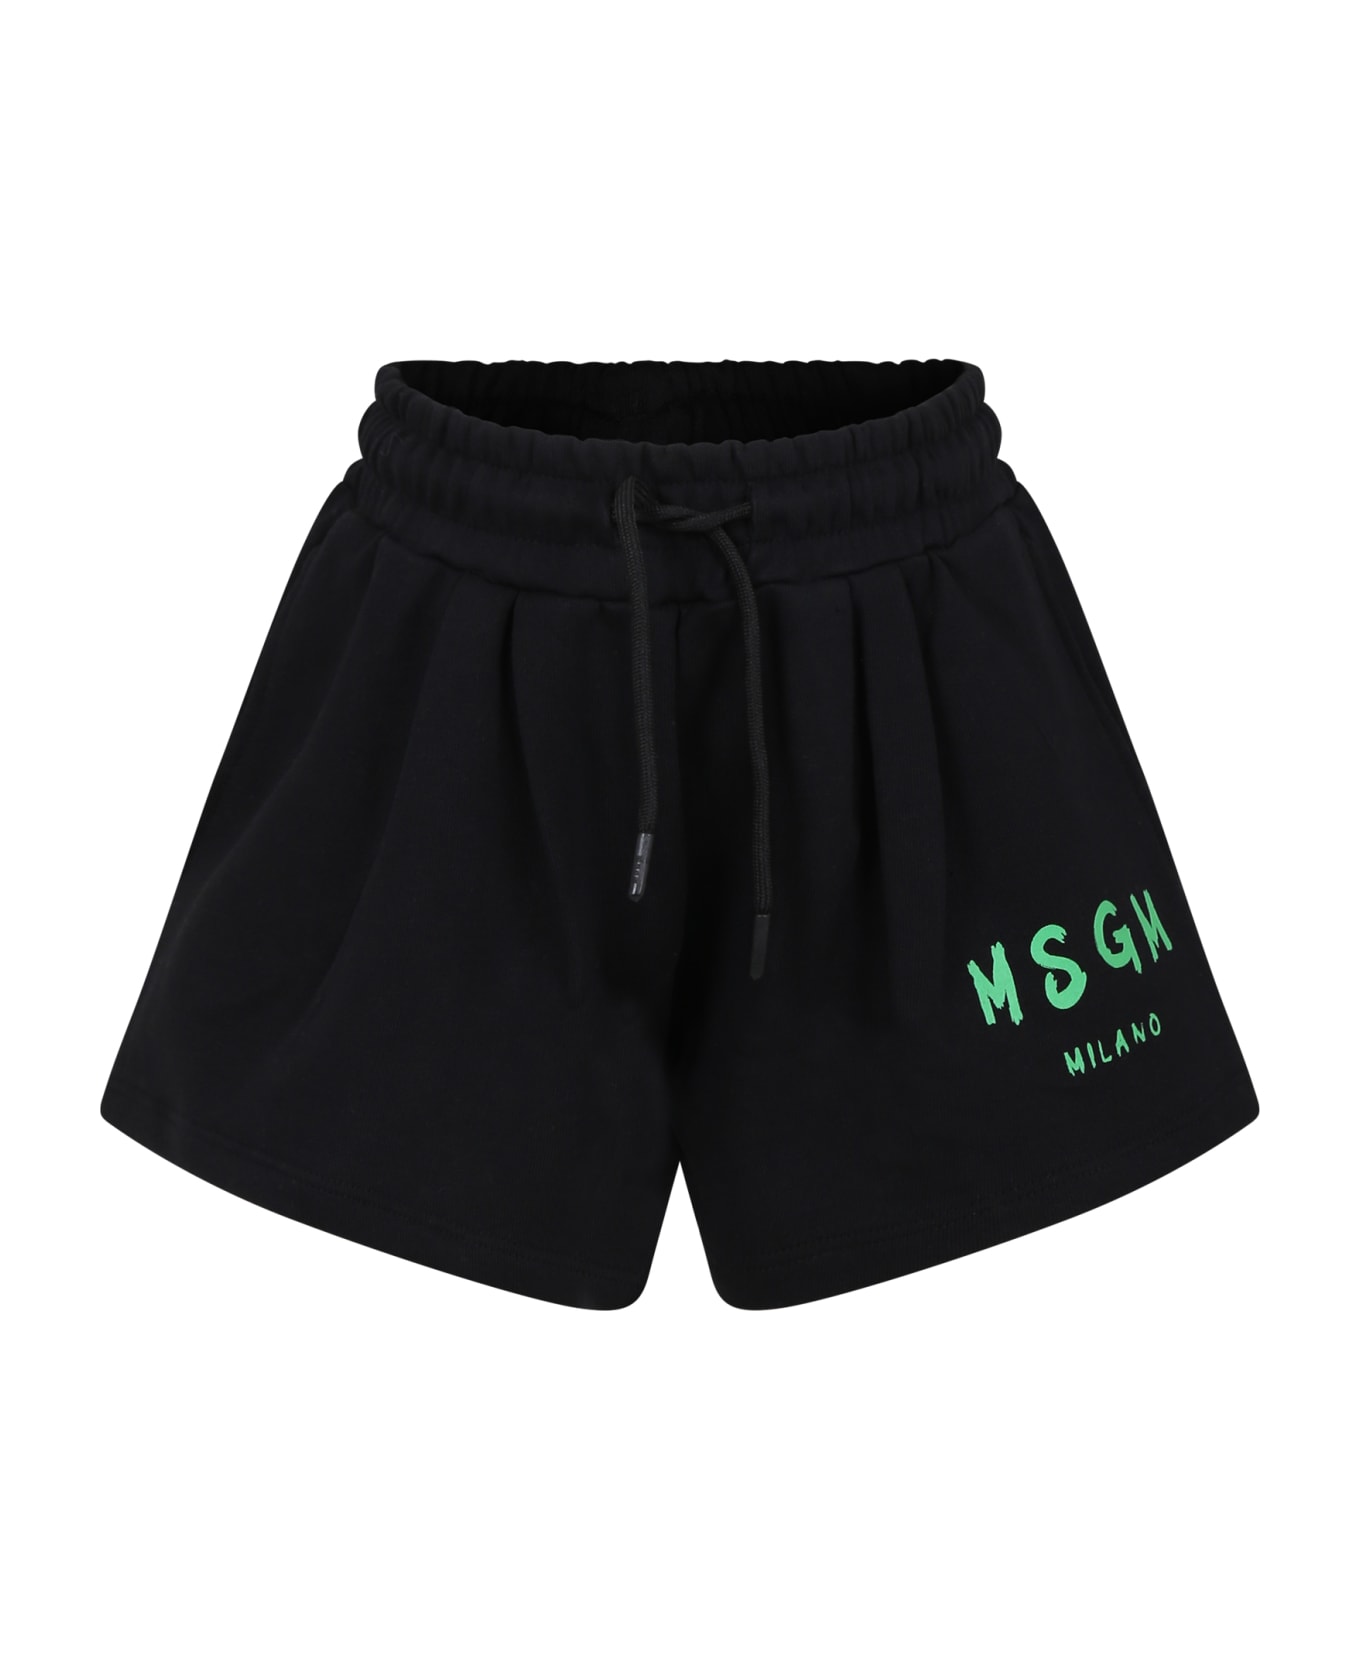 MSGM Black Shorts For Girl With Logo - Black